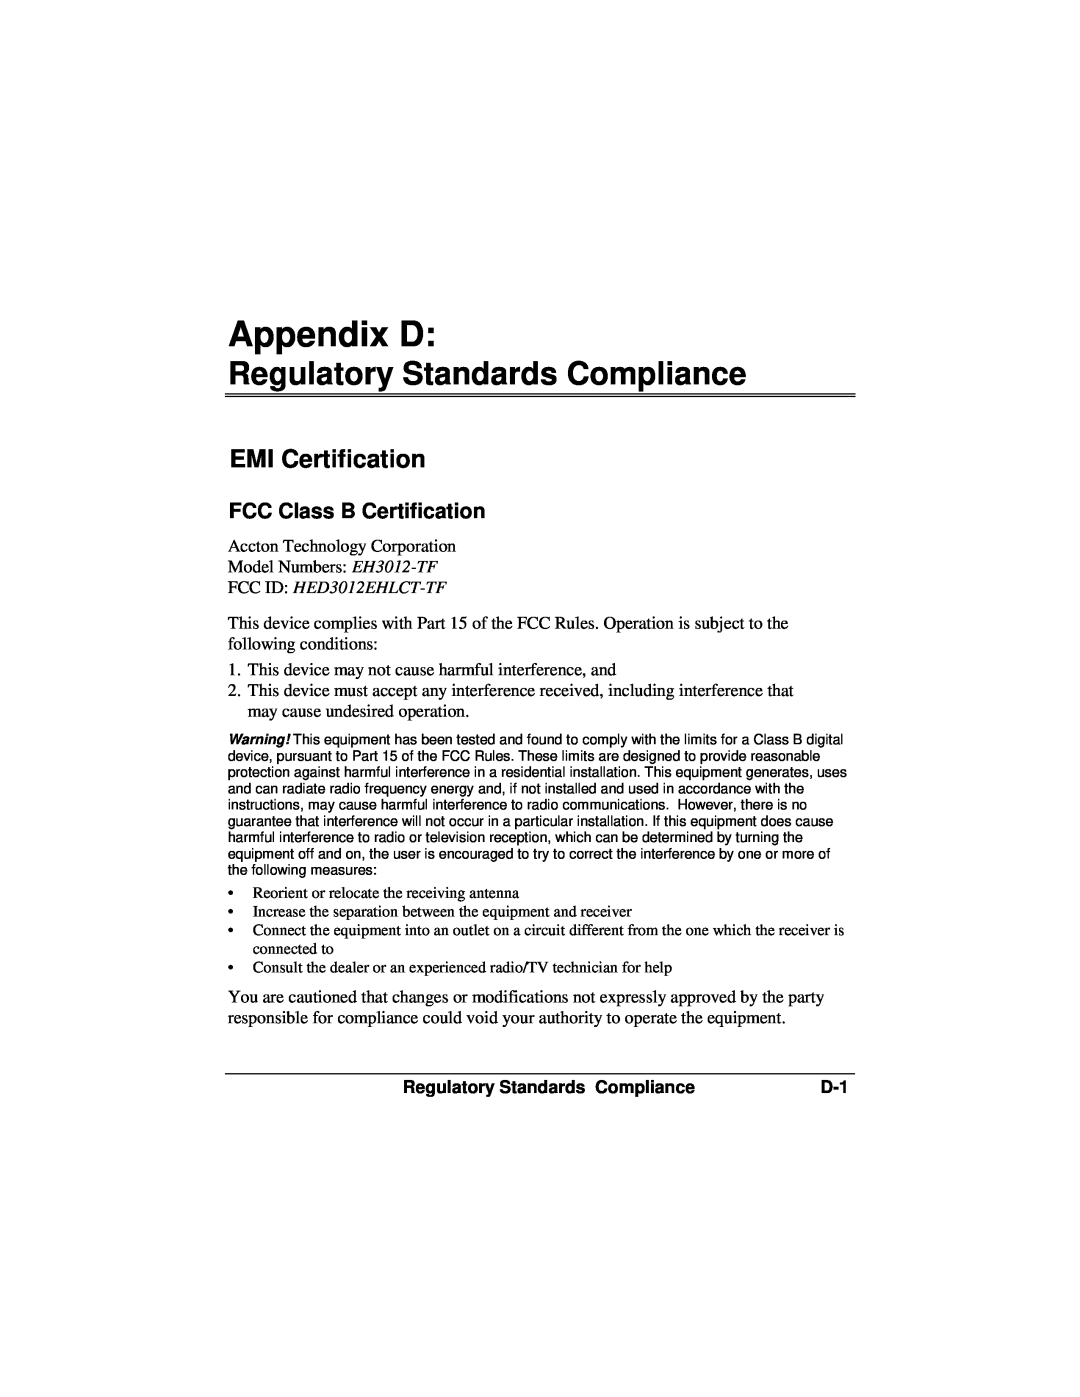 Accton Technology 12se manual Appendix D, Regulatory Standards Compliance, EMI Certification, FCC ID HED3012EHLCT-TF 